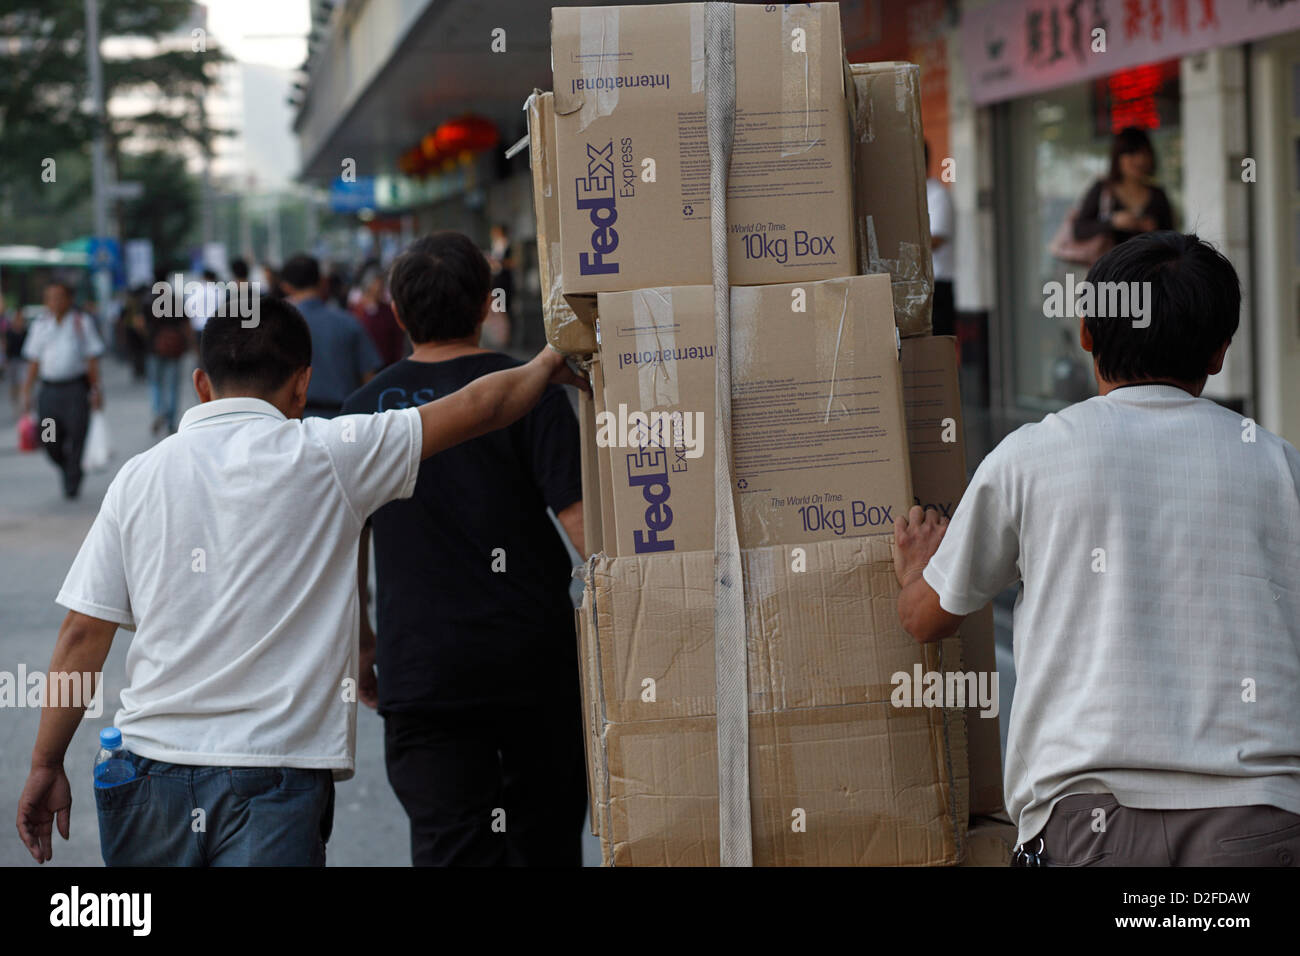 Shenzhen, China, three men push packages labeled FEDEX Stock Photo